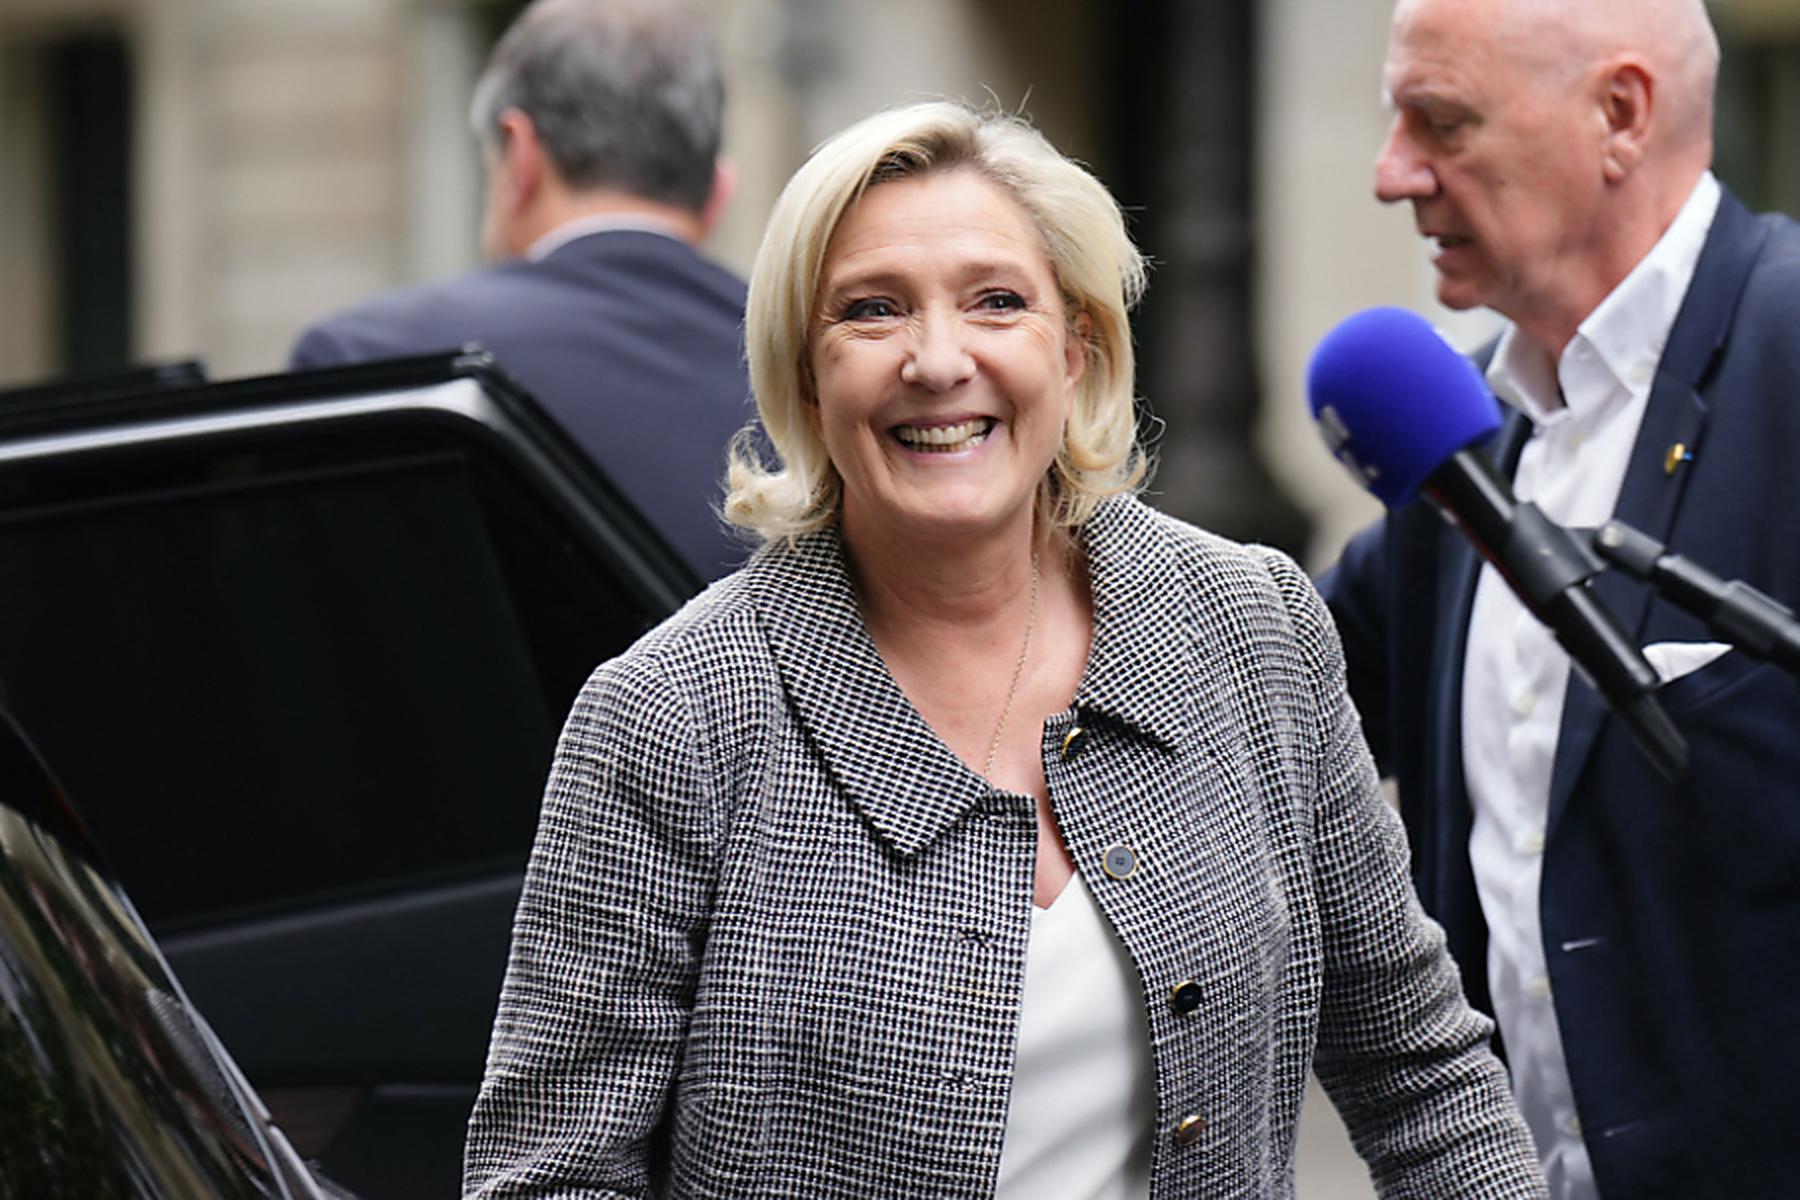 Paris: Ermittlungen gegen Le Pen wegen Wahlkampffinanzierung